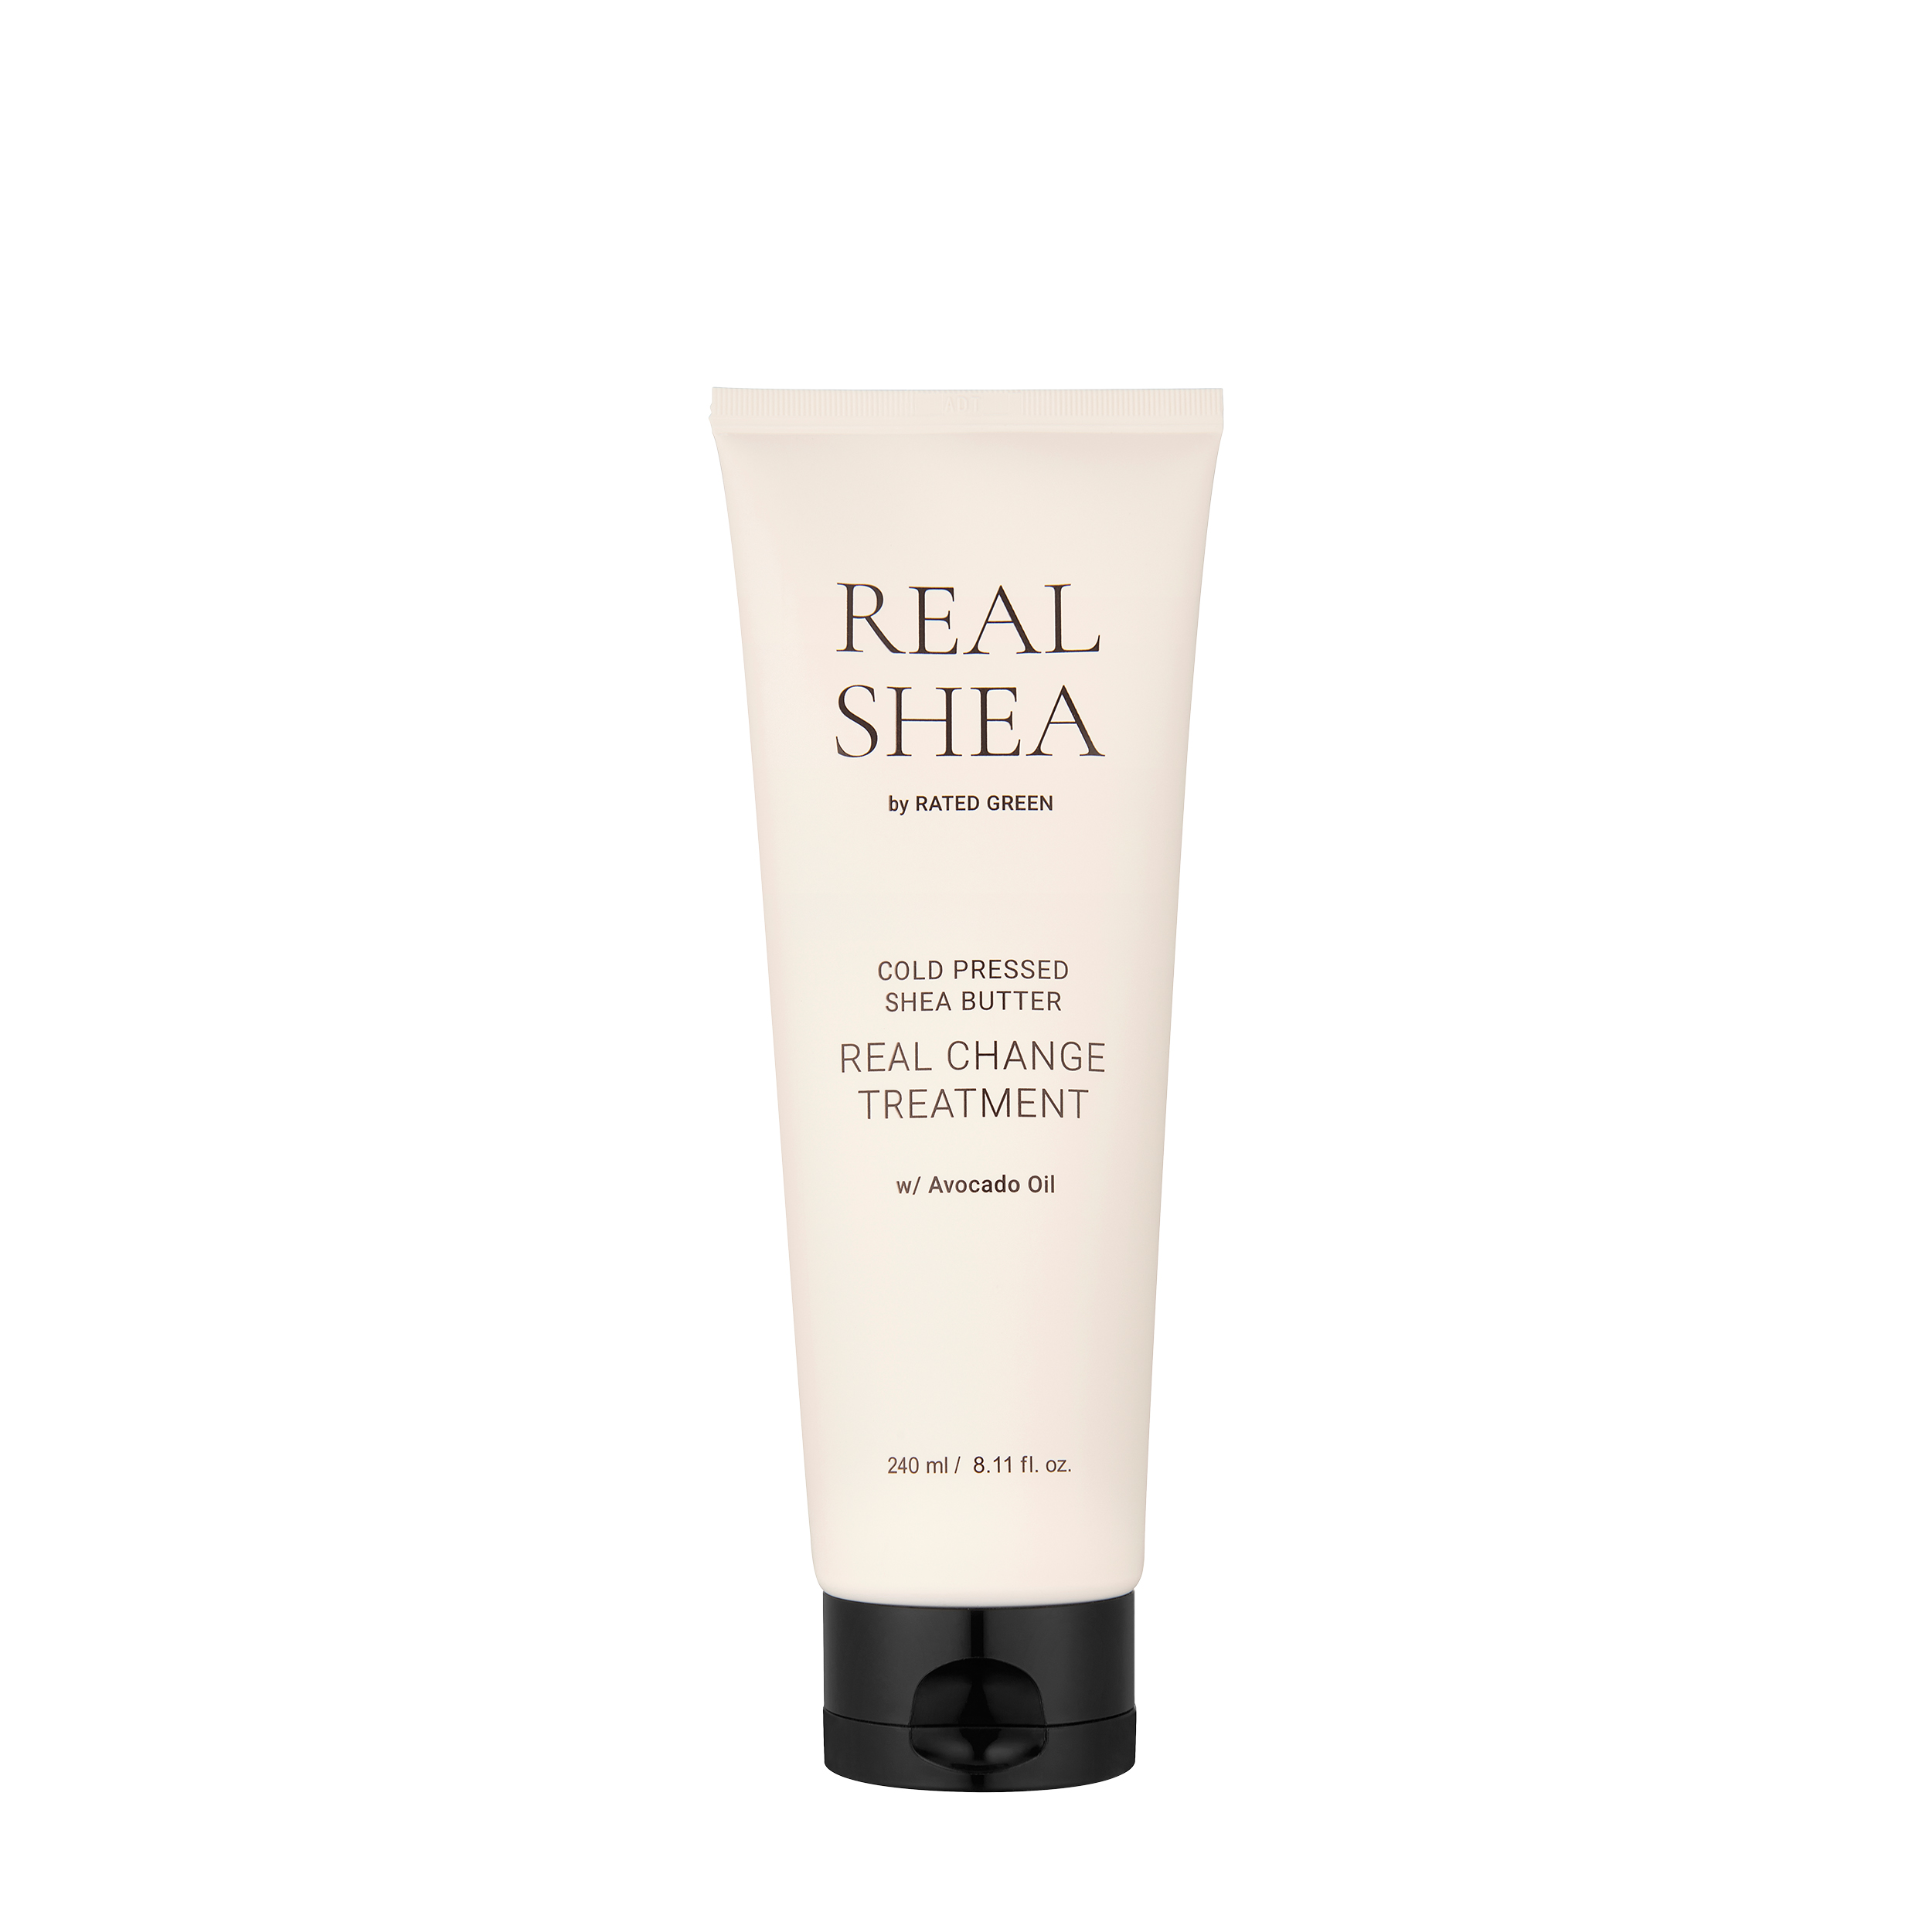 Rated Green Питательная маска для волос с маслом ши
Real Shea Real Change Treatment RG-RS02 - фото 1